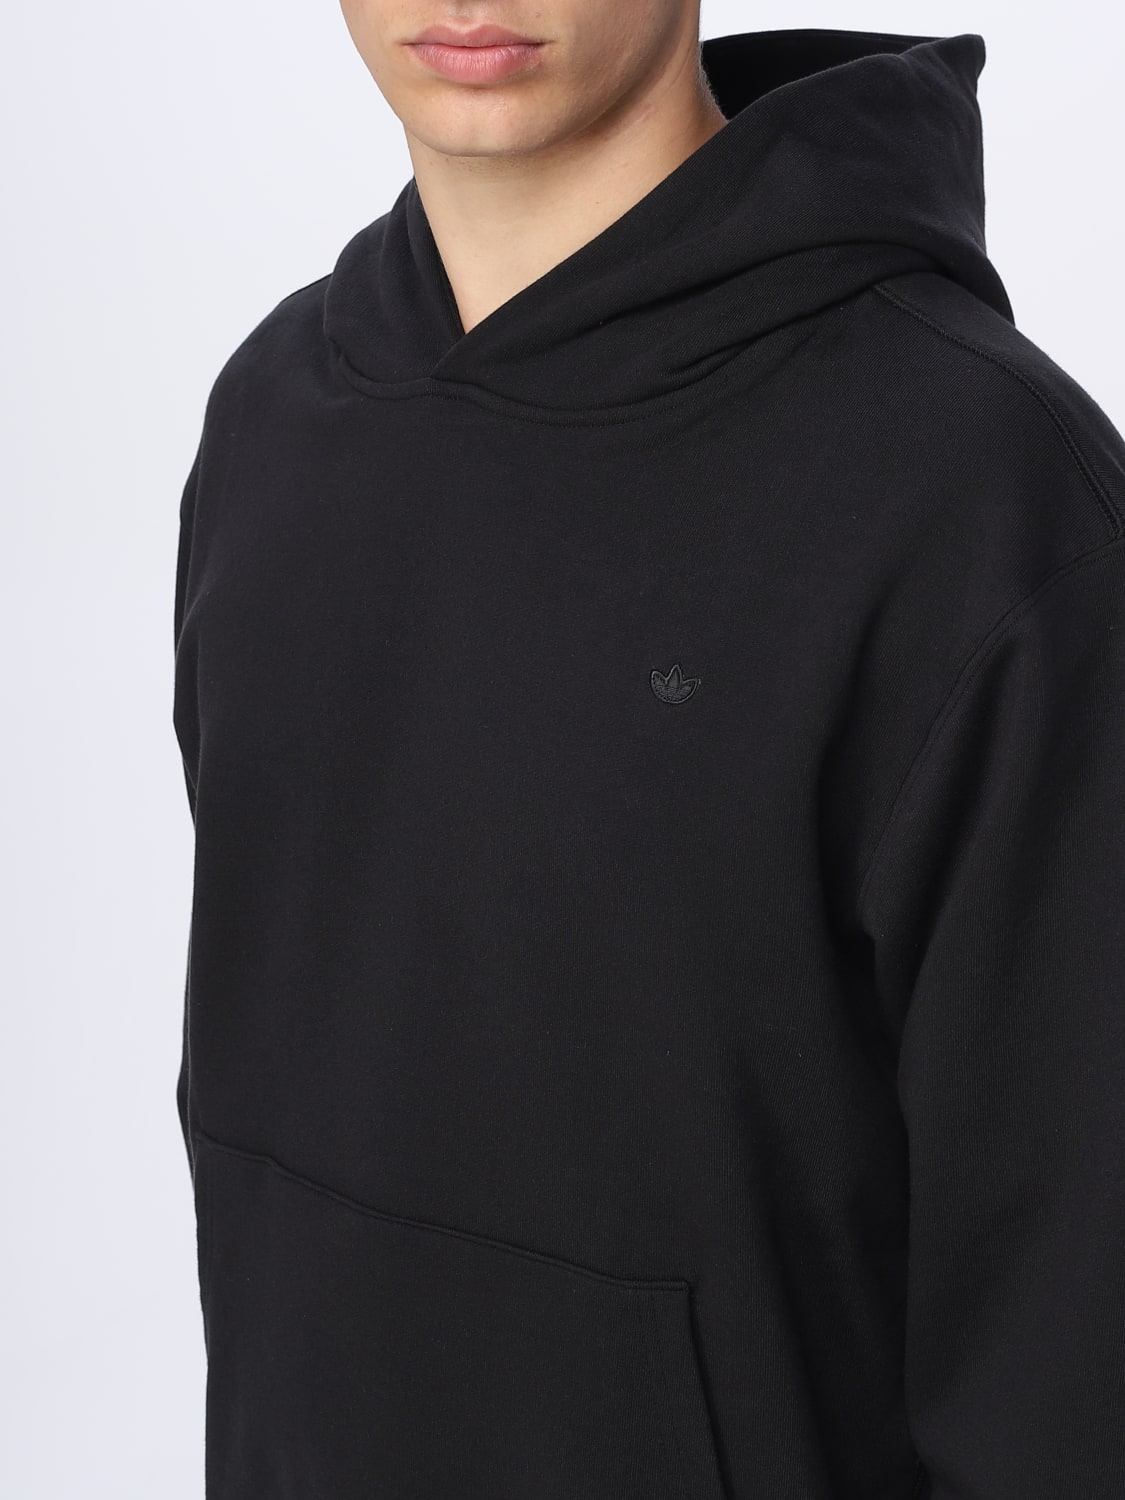 at HK2937 ADIDAS Adidas | online sweatshirt cotton ORIGINALS: sweatshirt Black - in Originals